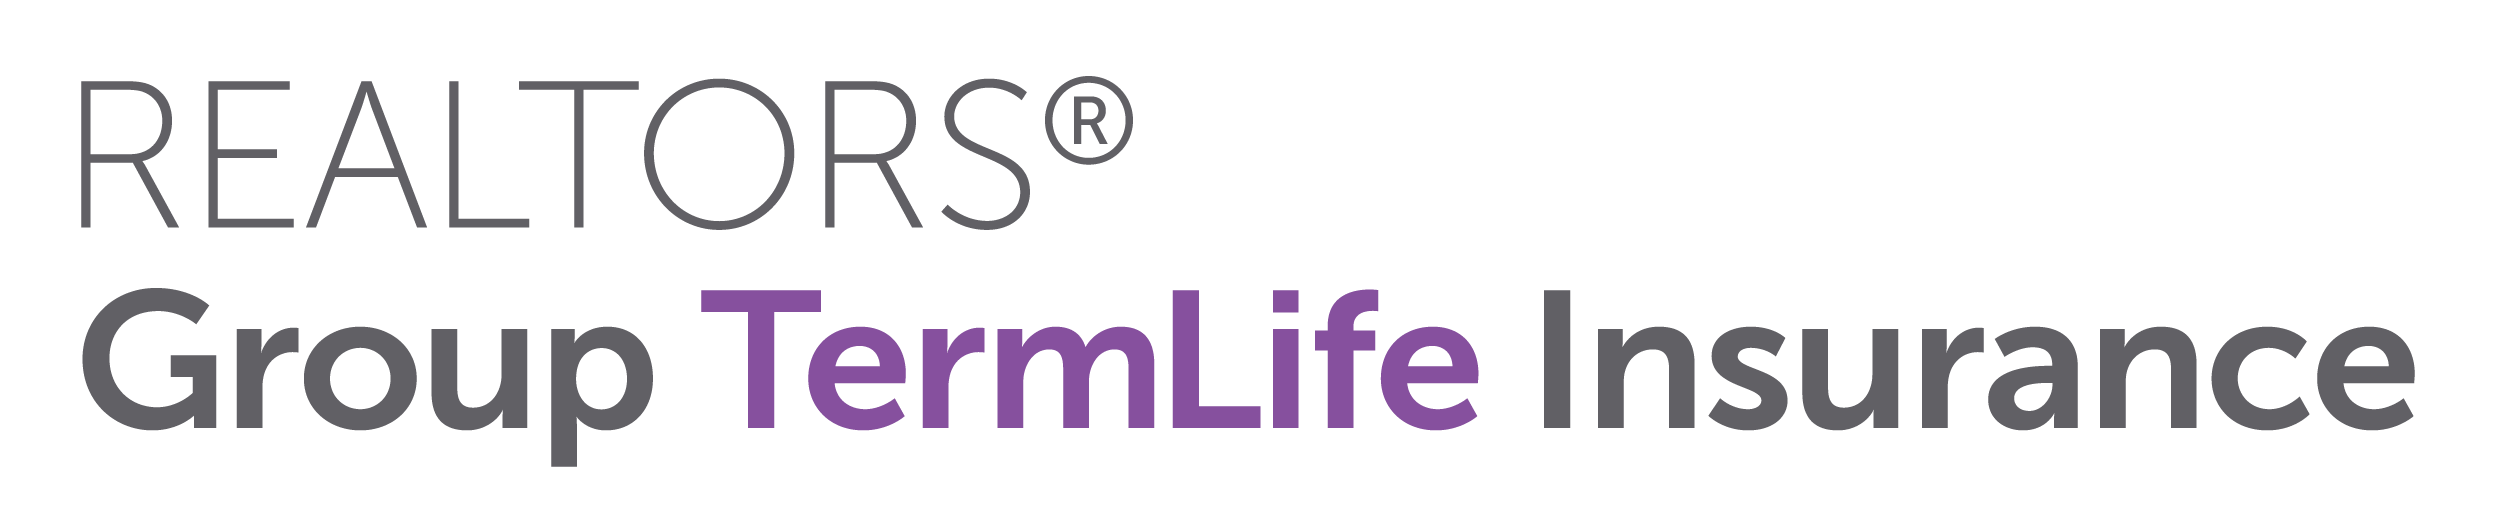 realtors group termlife insurance logo